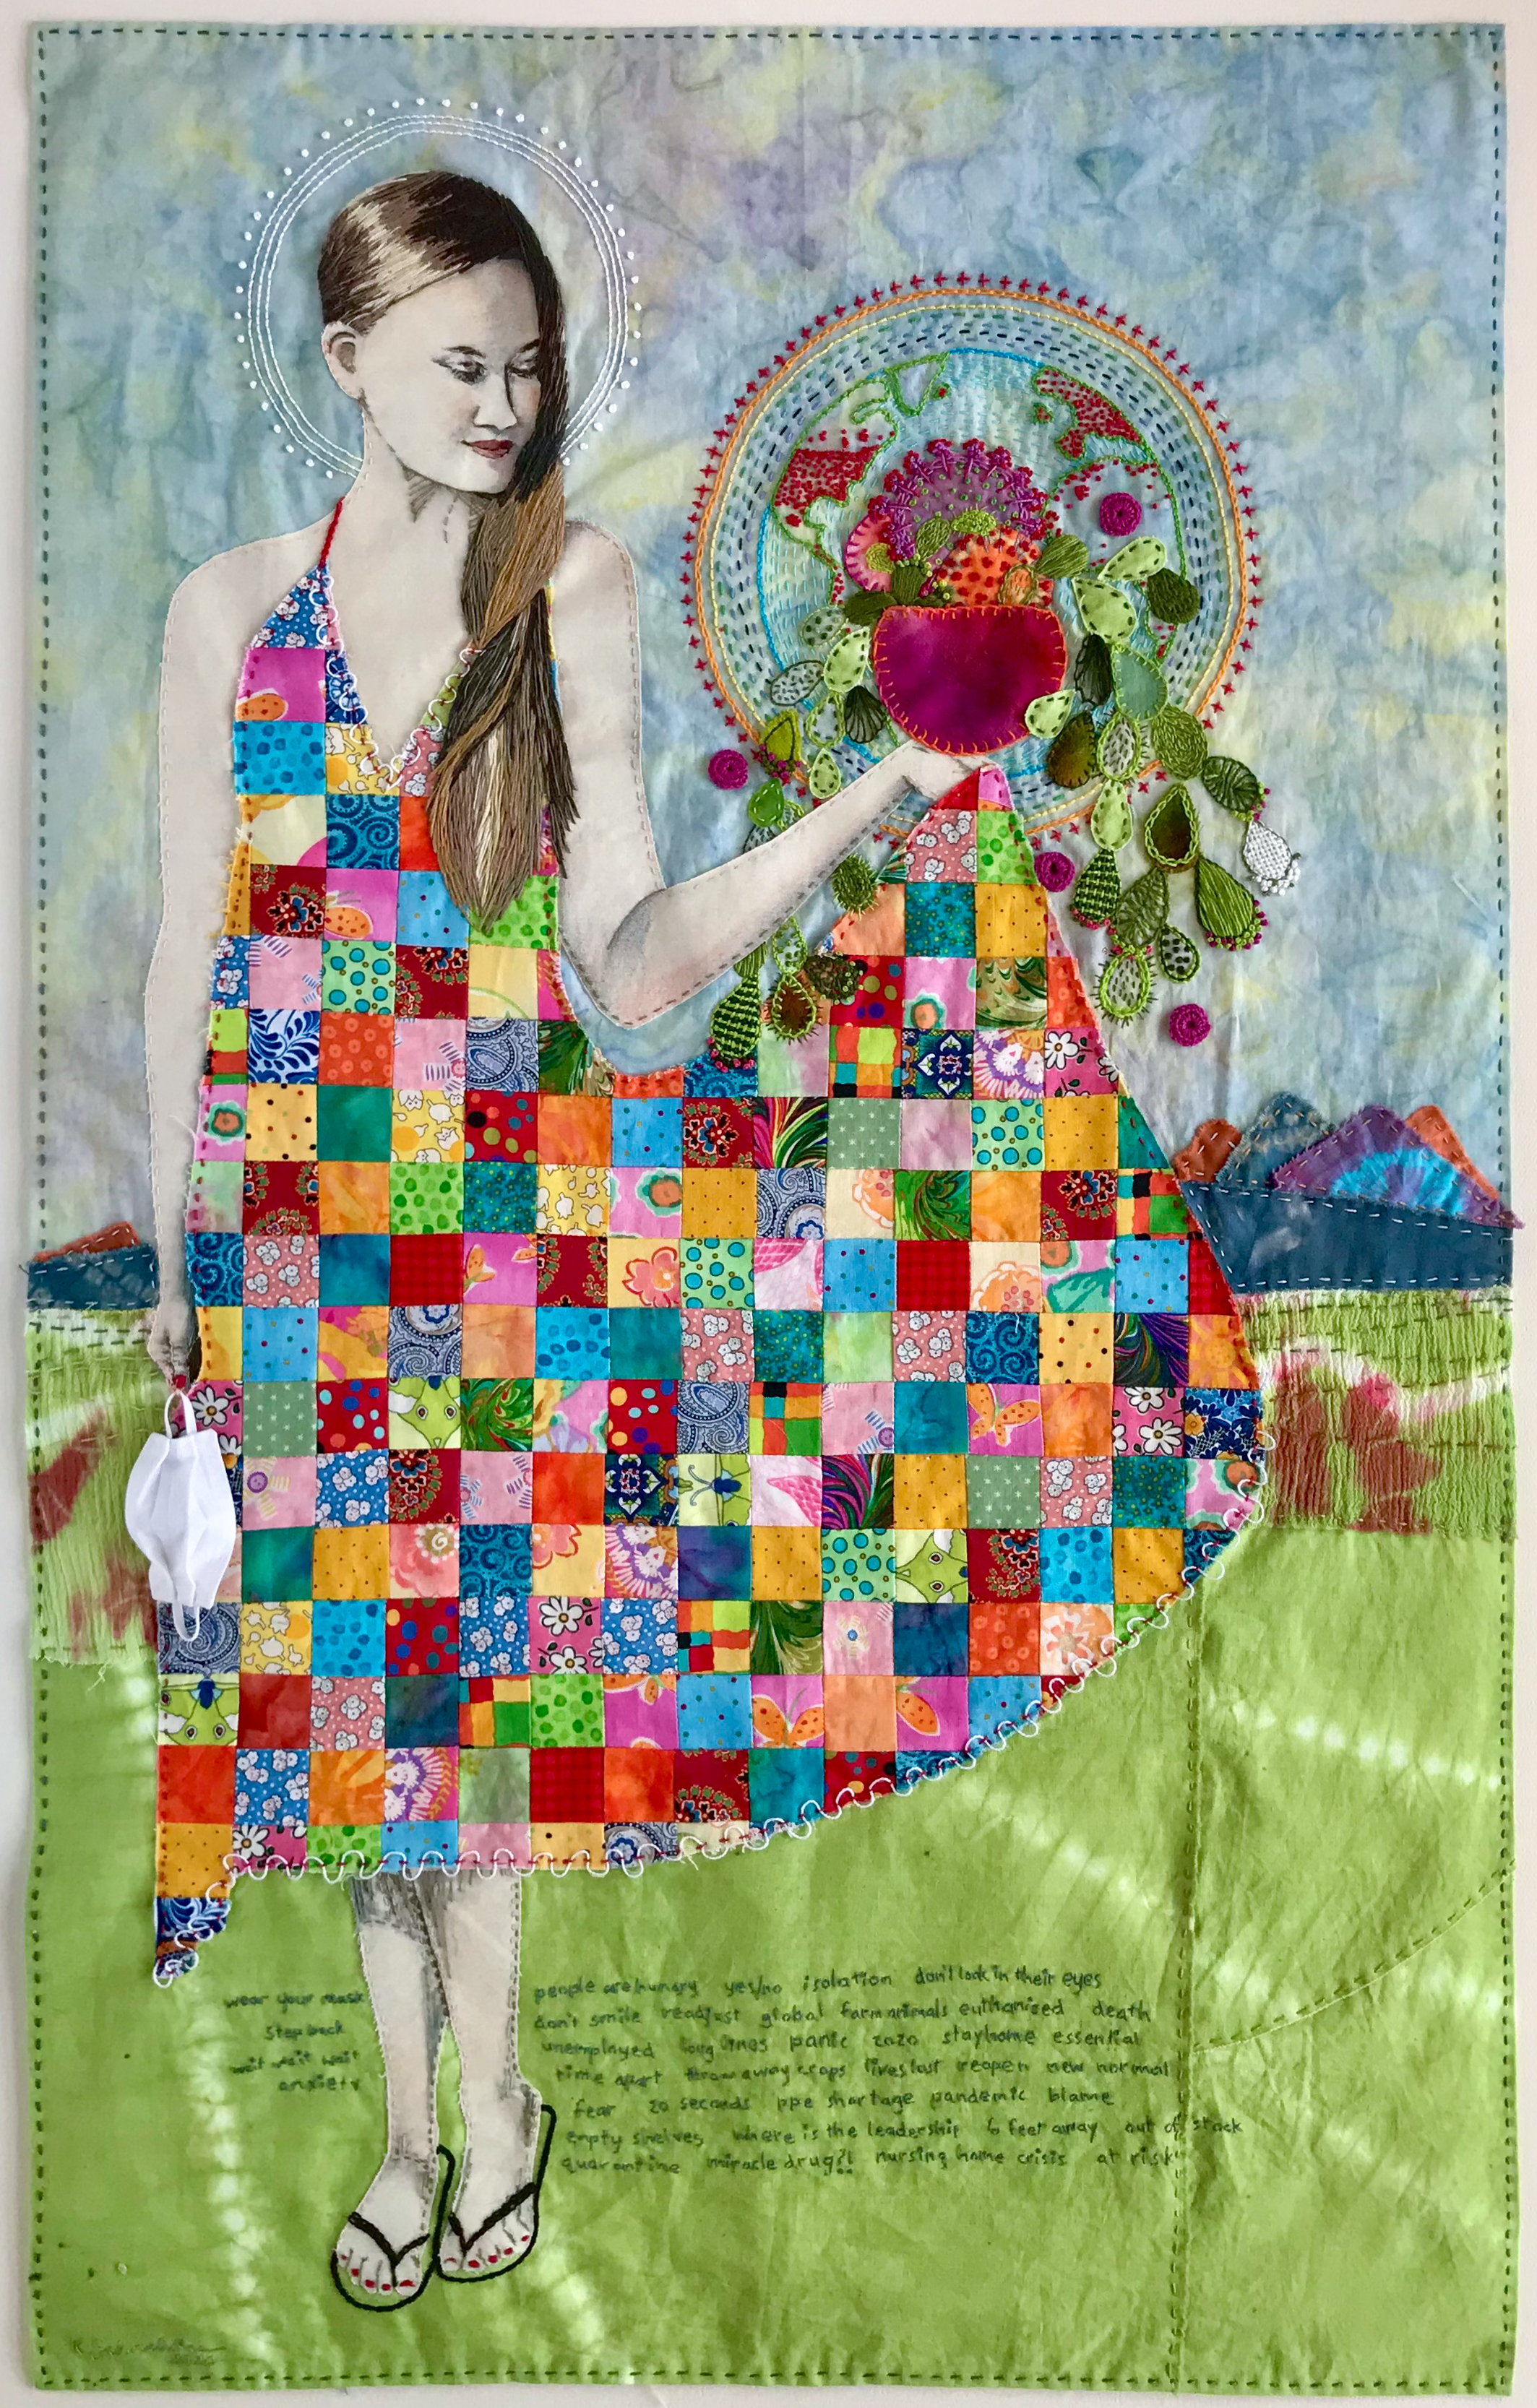 Fiber art of a figure in a patchwork dress.